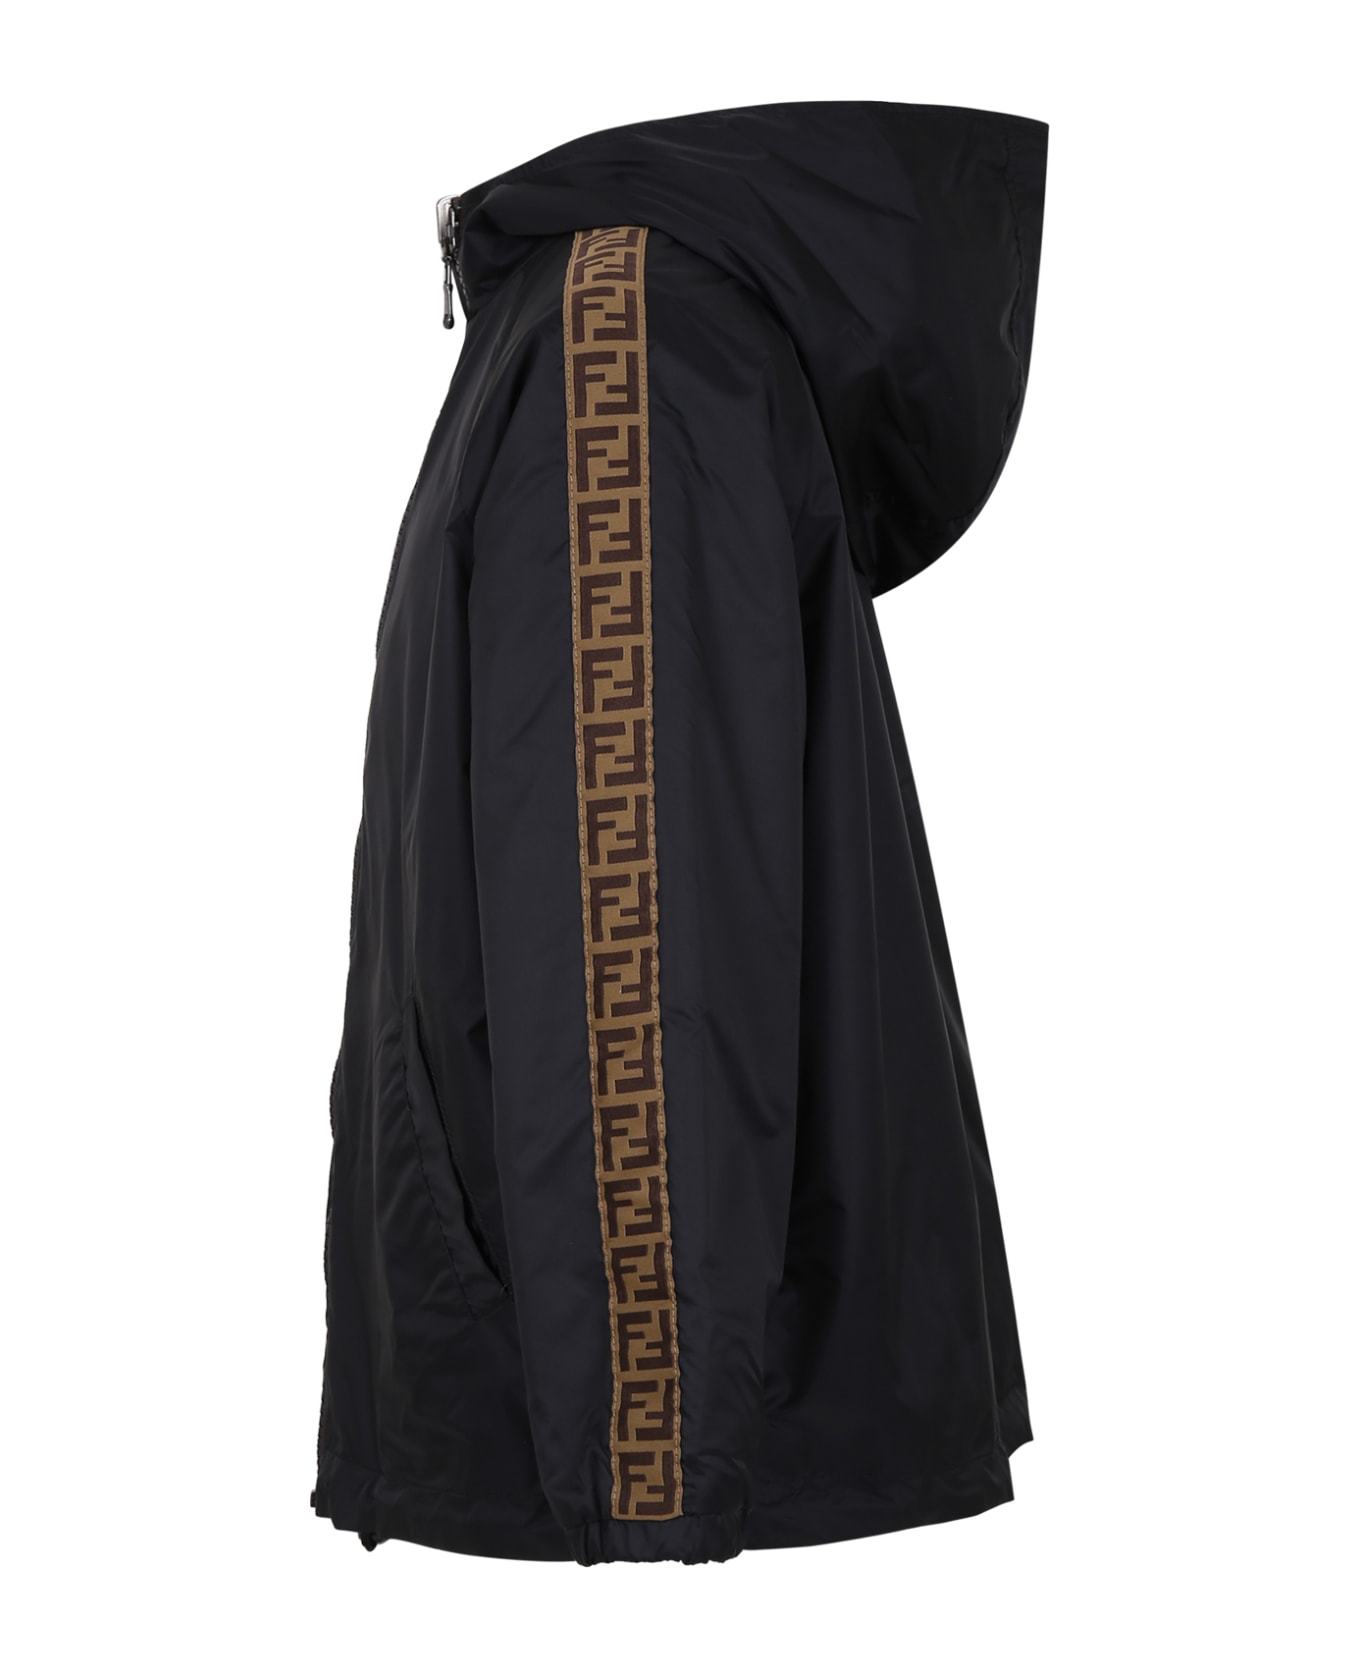 Fendi Black Reversible Raincoat For Kids With Double F - Black